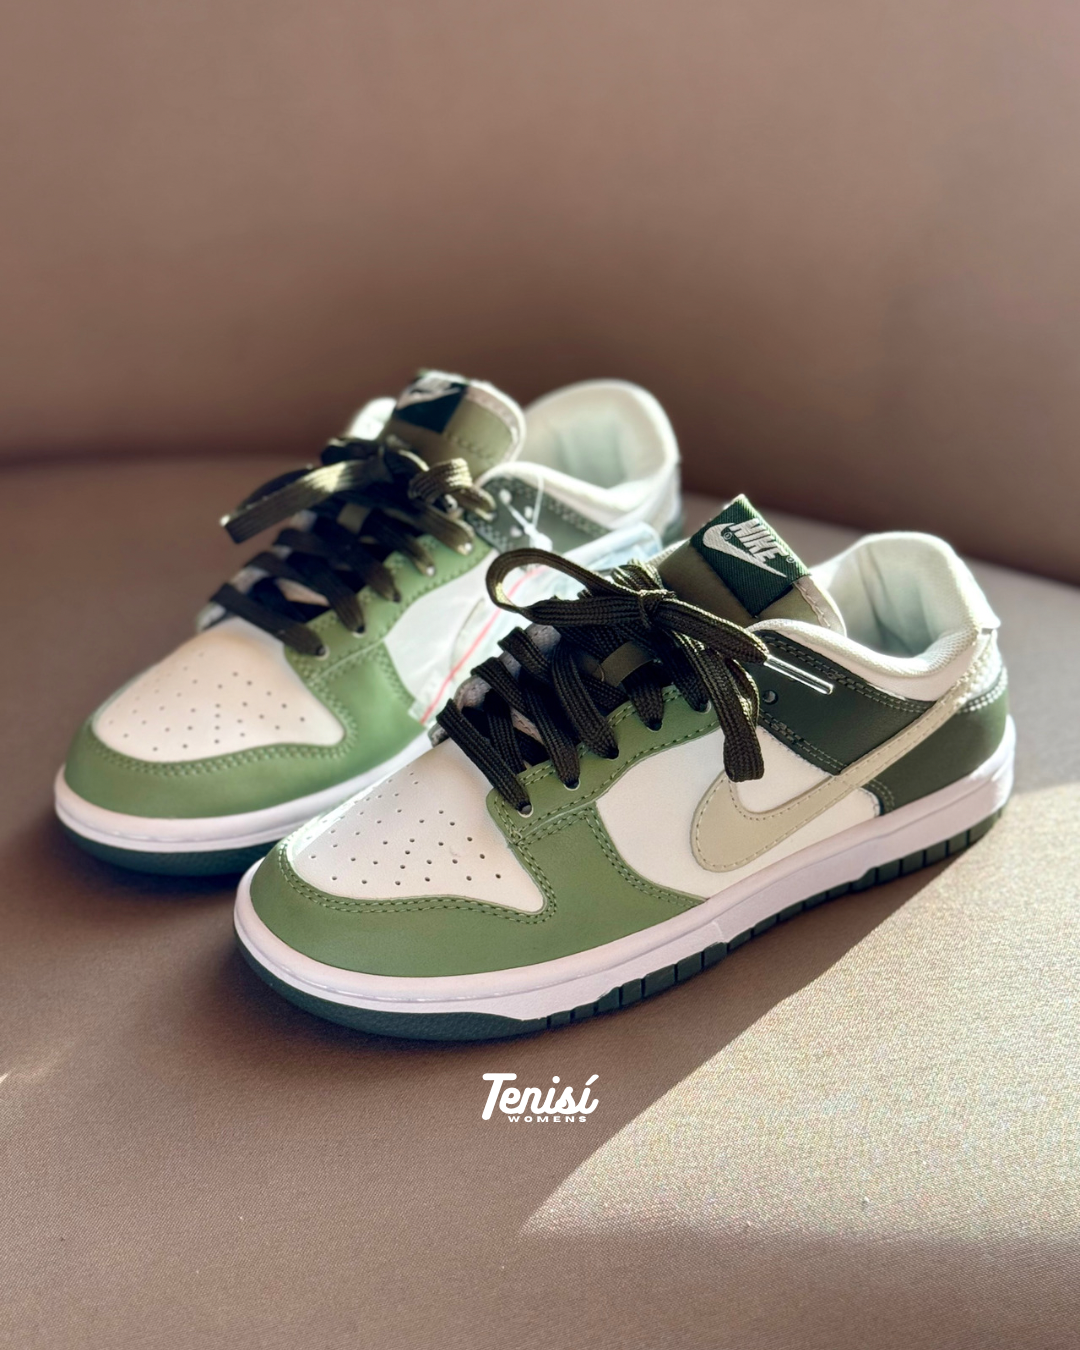 Nike Dunk Low “Green”